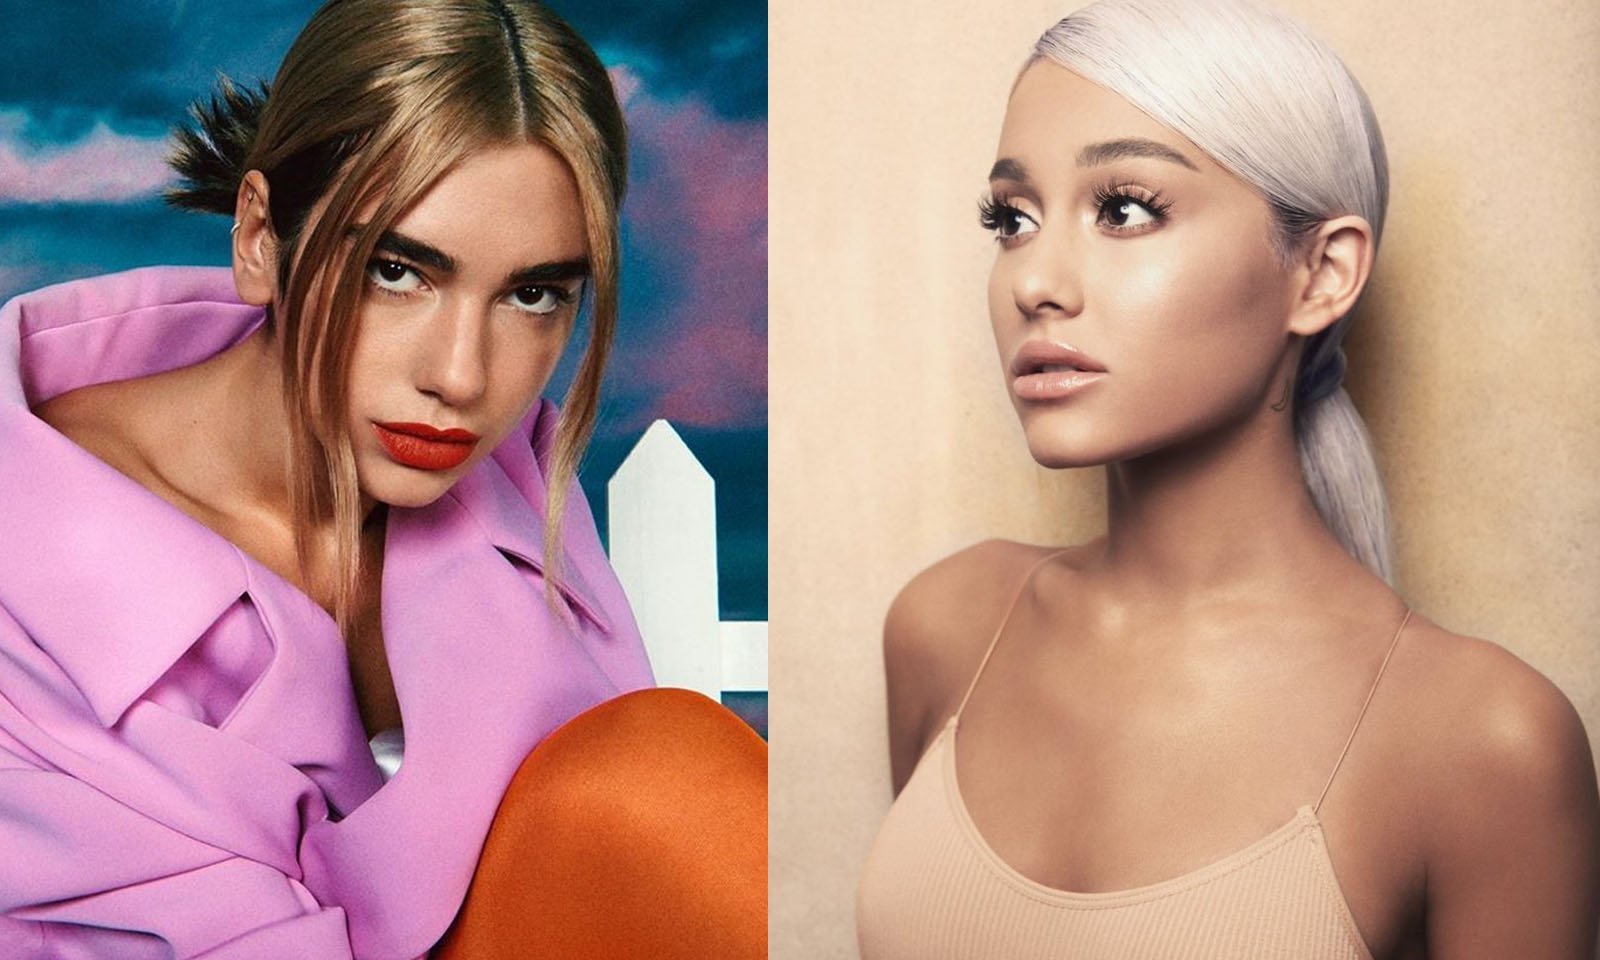 Dua Lipa e Ariana Grande gravaram remix da música “Pretty Please”, segundo site